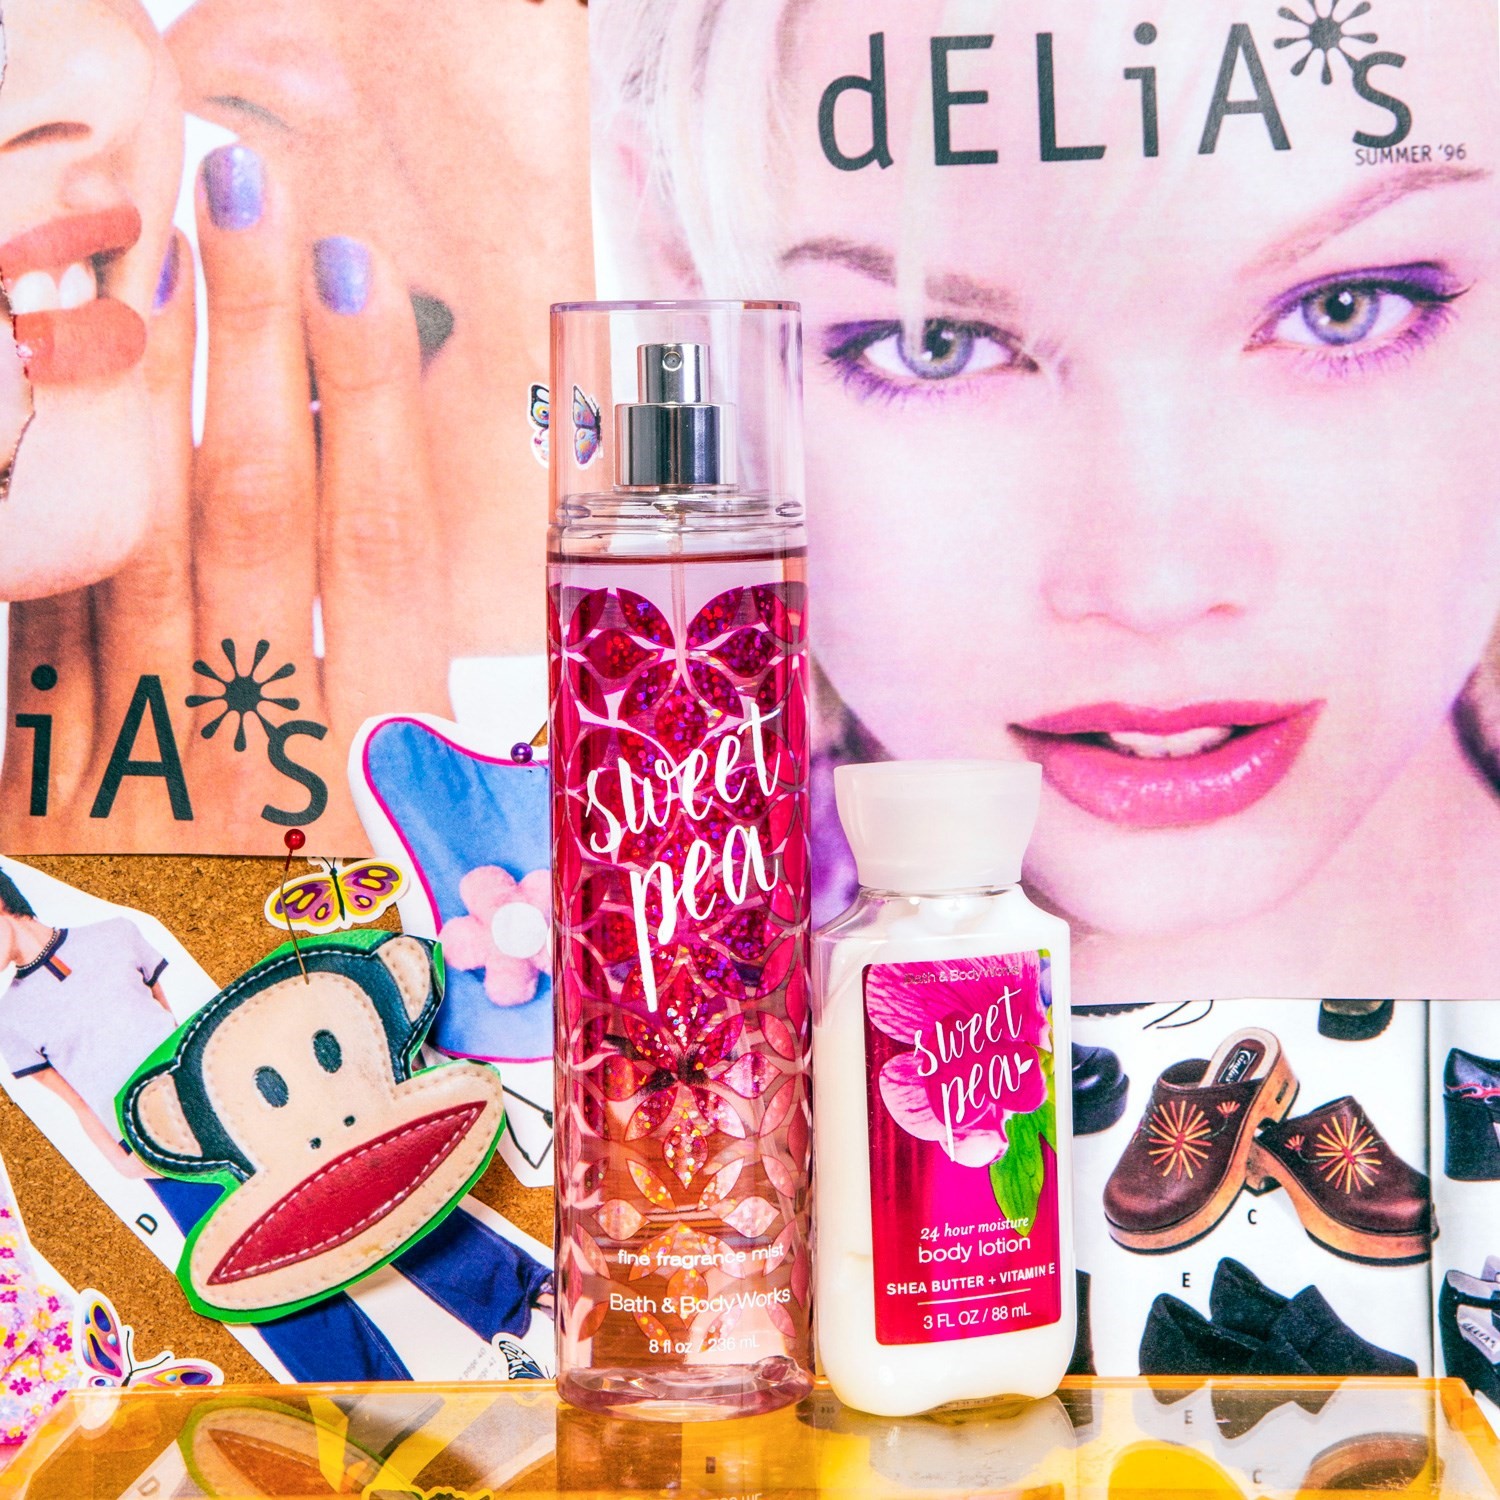 Victoria's Secret Summer Fantasy Fragrances body fragrances - The Perfume  Girl